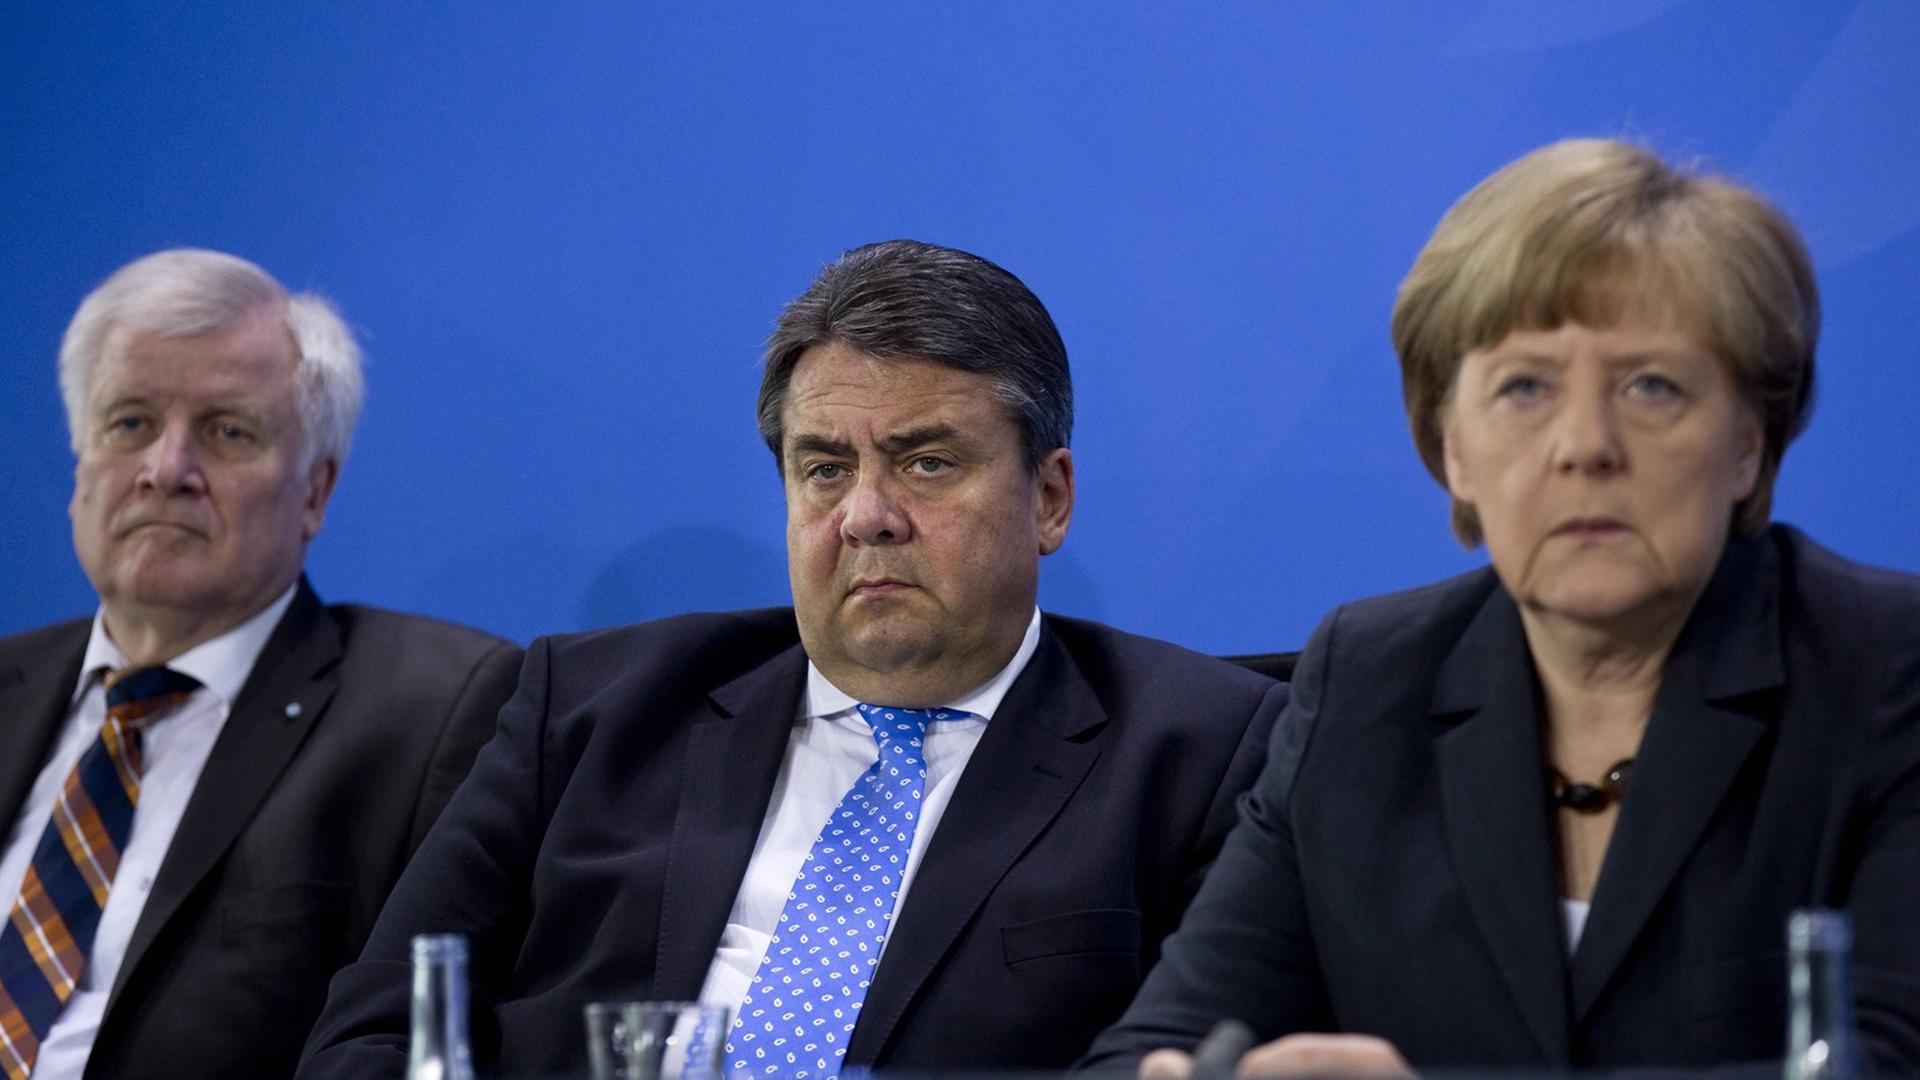 Bayerns Ministerpräsident Horst Seehofer, CSU, Wirtschaftsminister Sigmar Gabriel, SPD, Bundeskanzlerin Angela Merkel, CDU (v.l.n.r.)